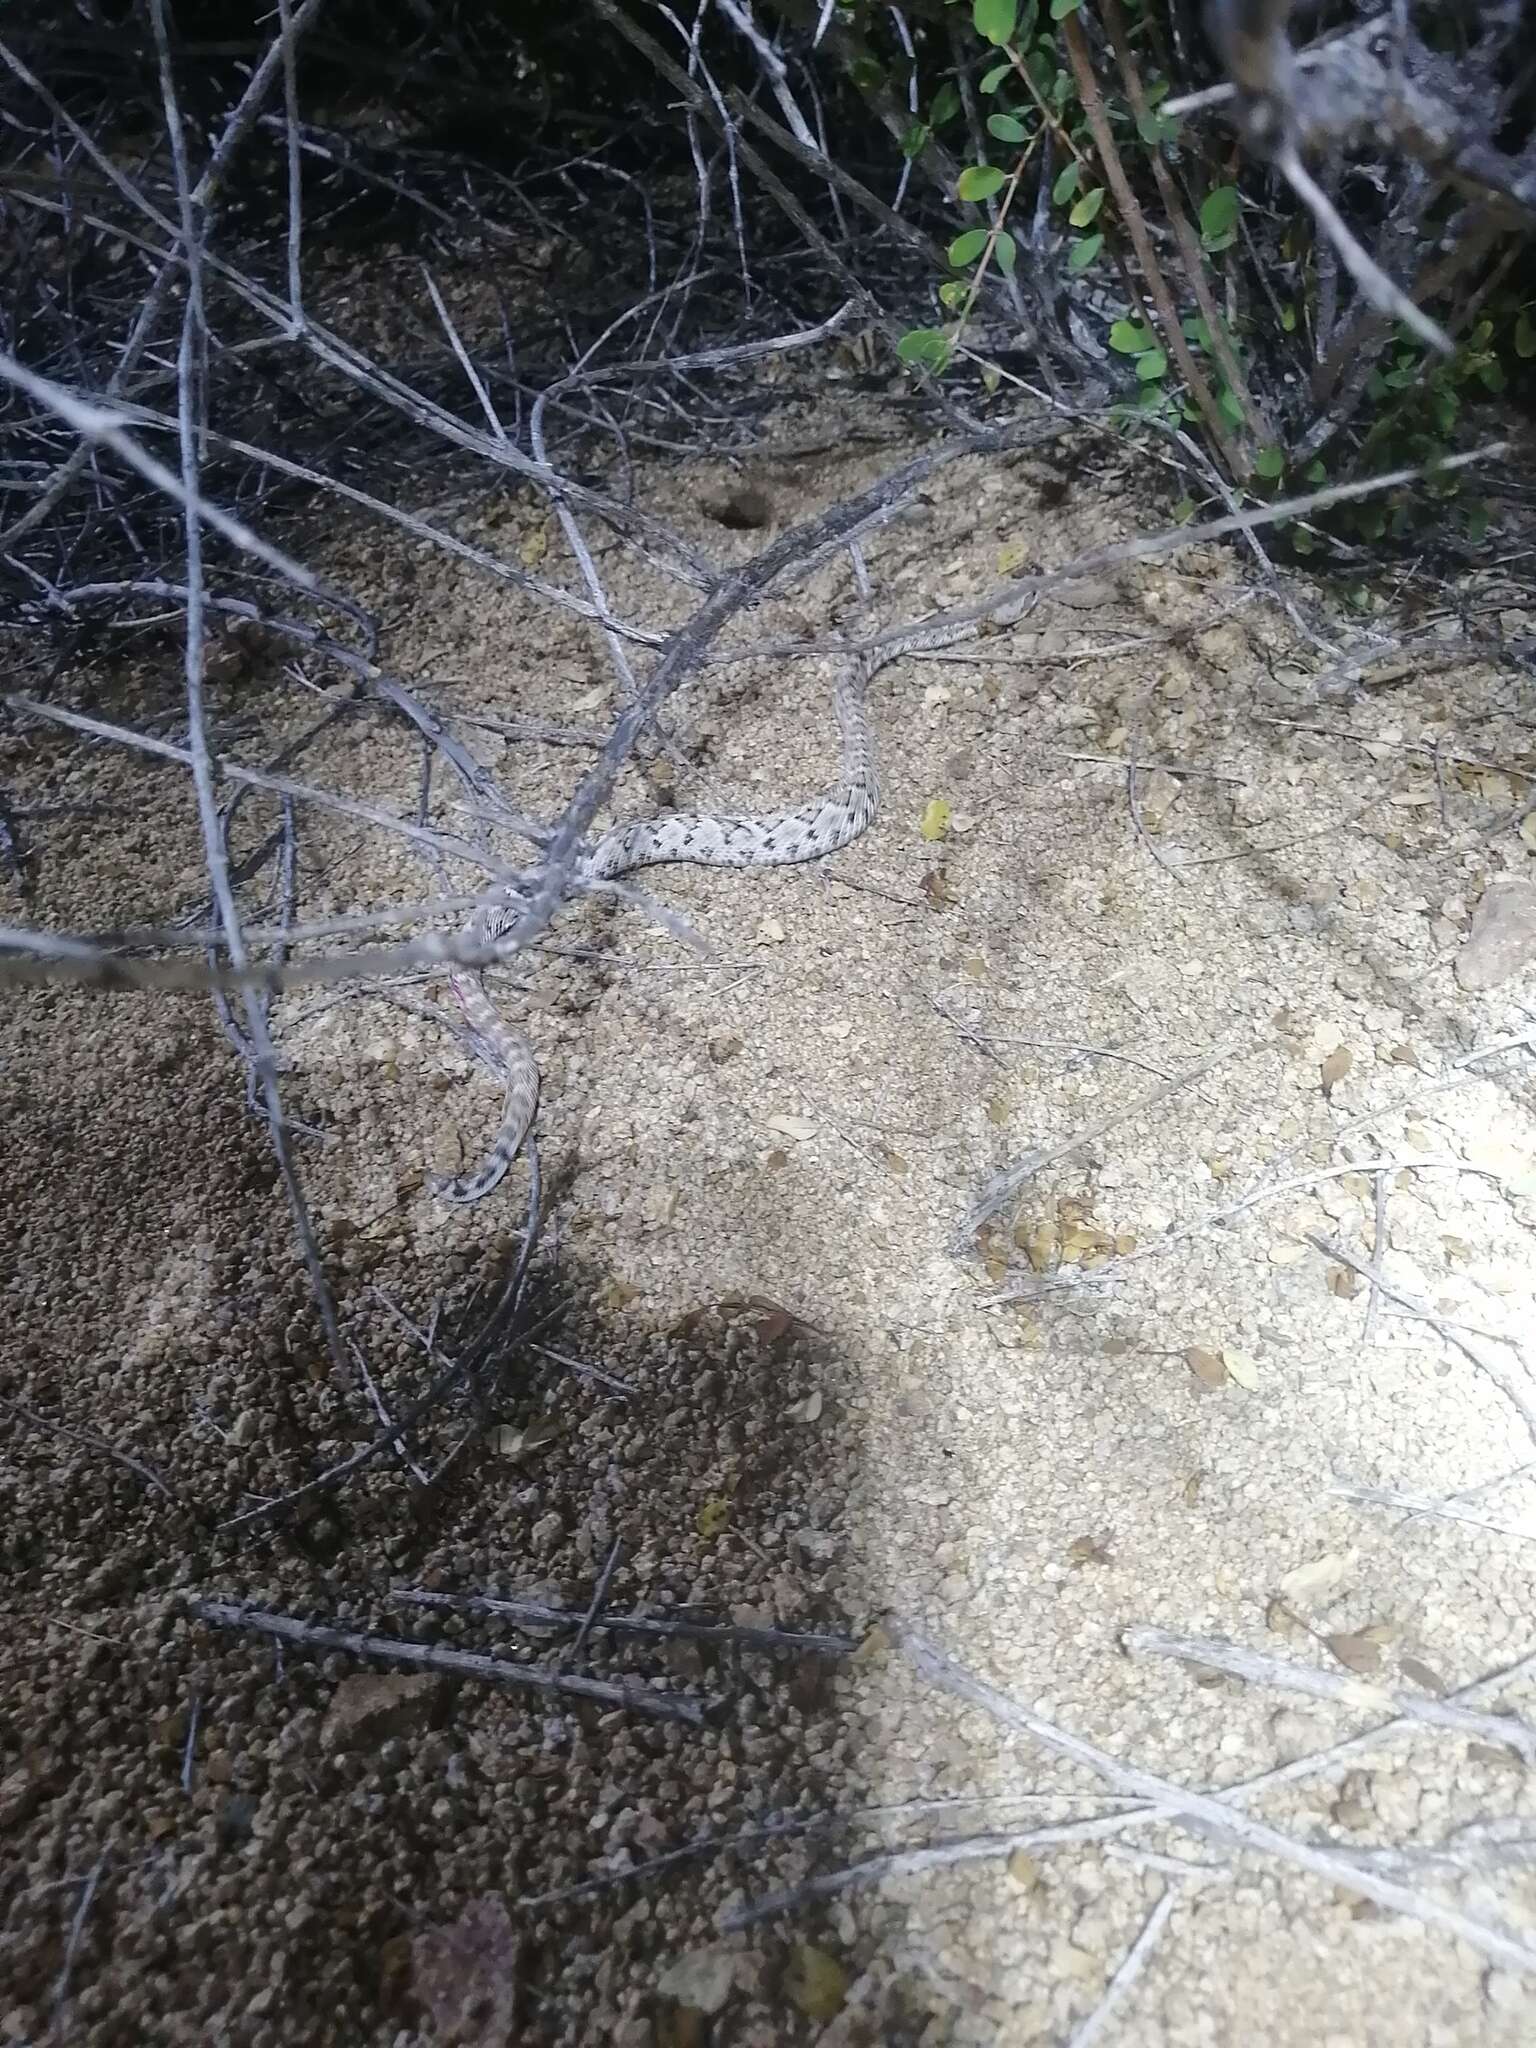 Image of Santa Catalina Island Rattlesnake